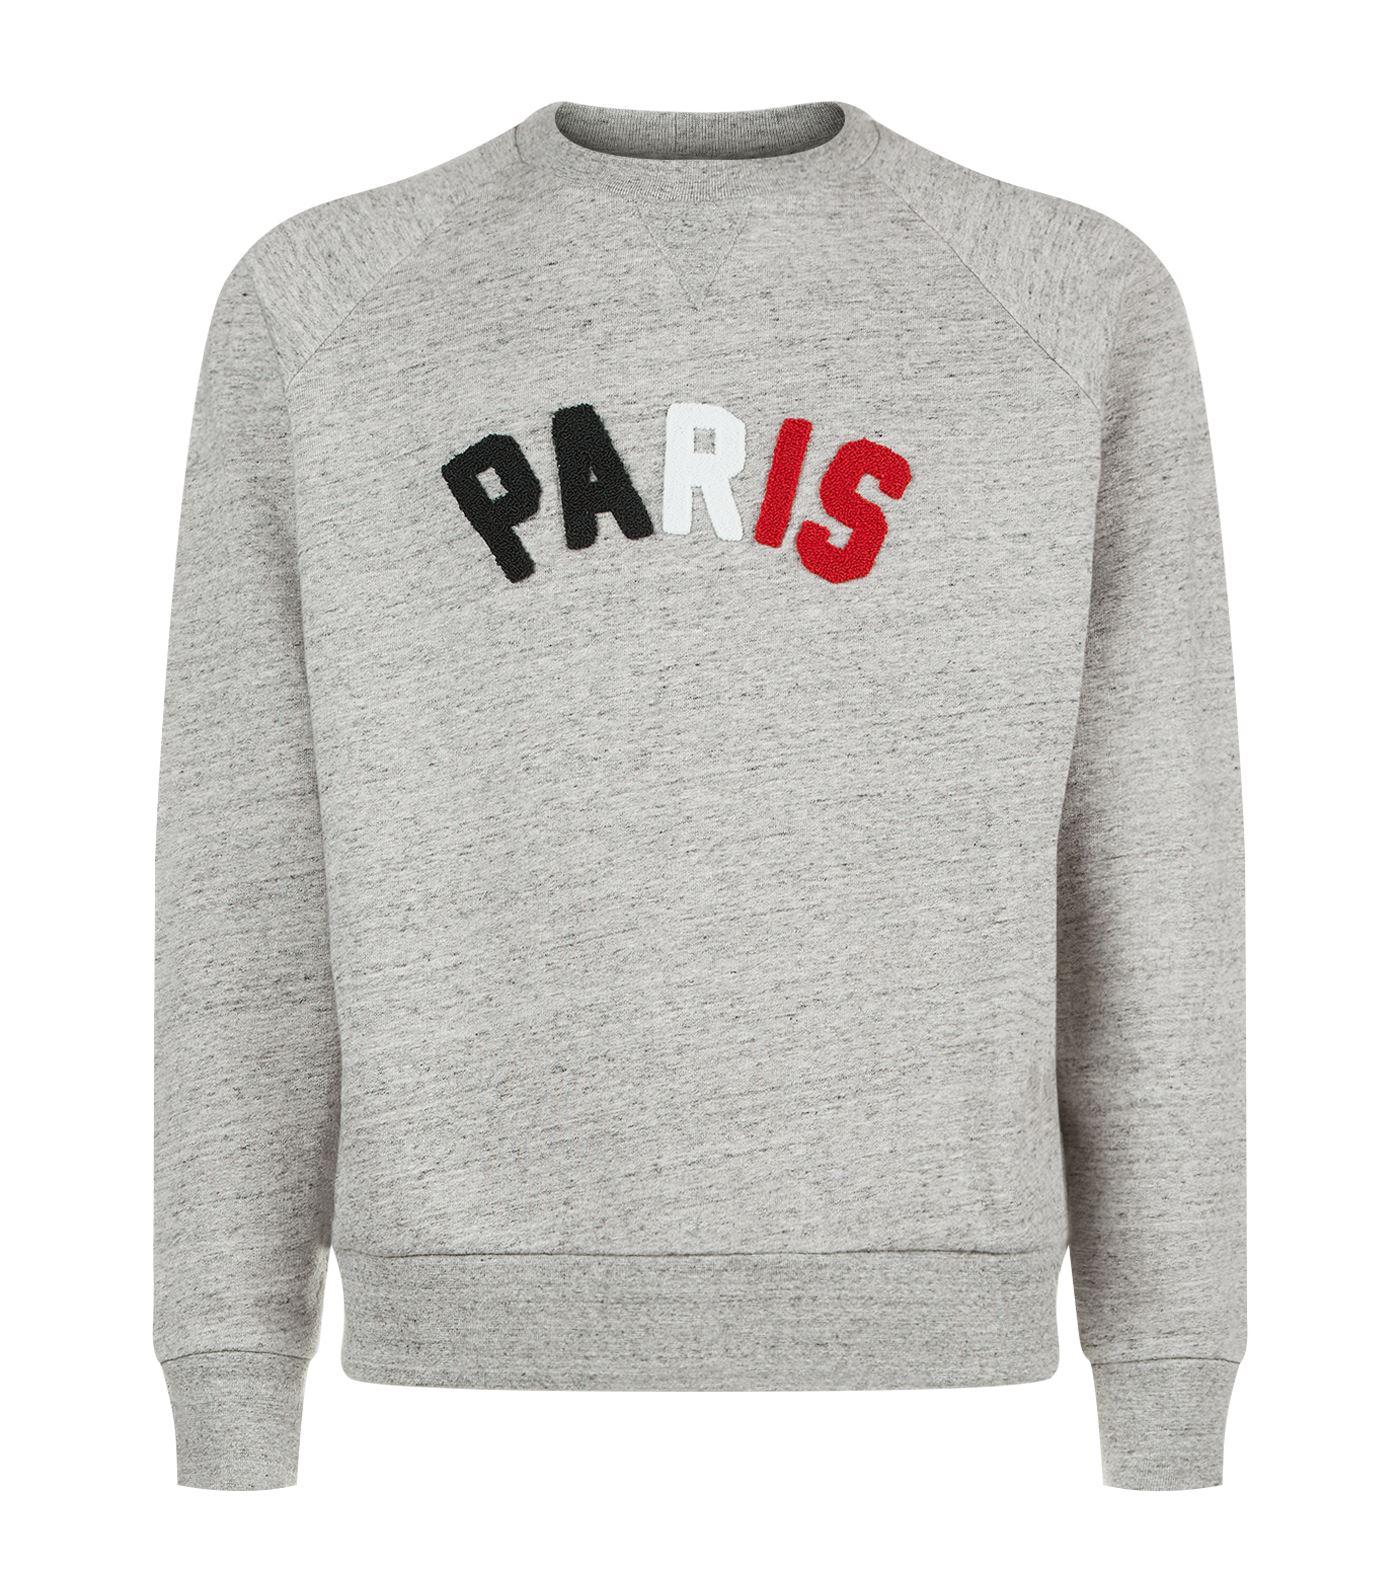 Sandro Paris Sweater in Black for Men - Lyst